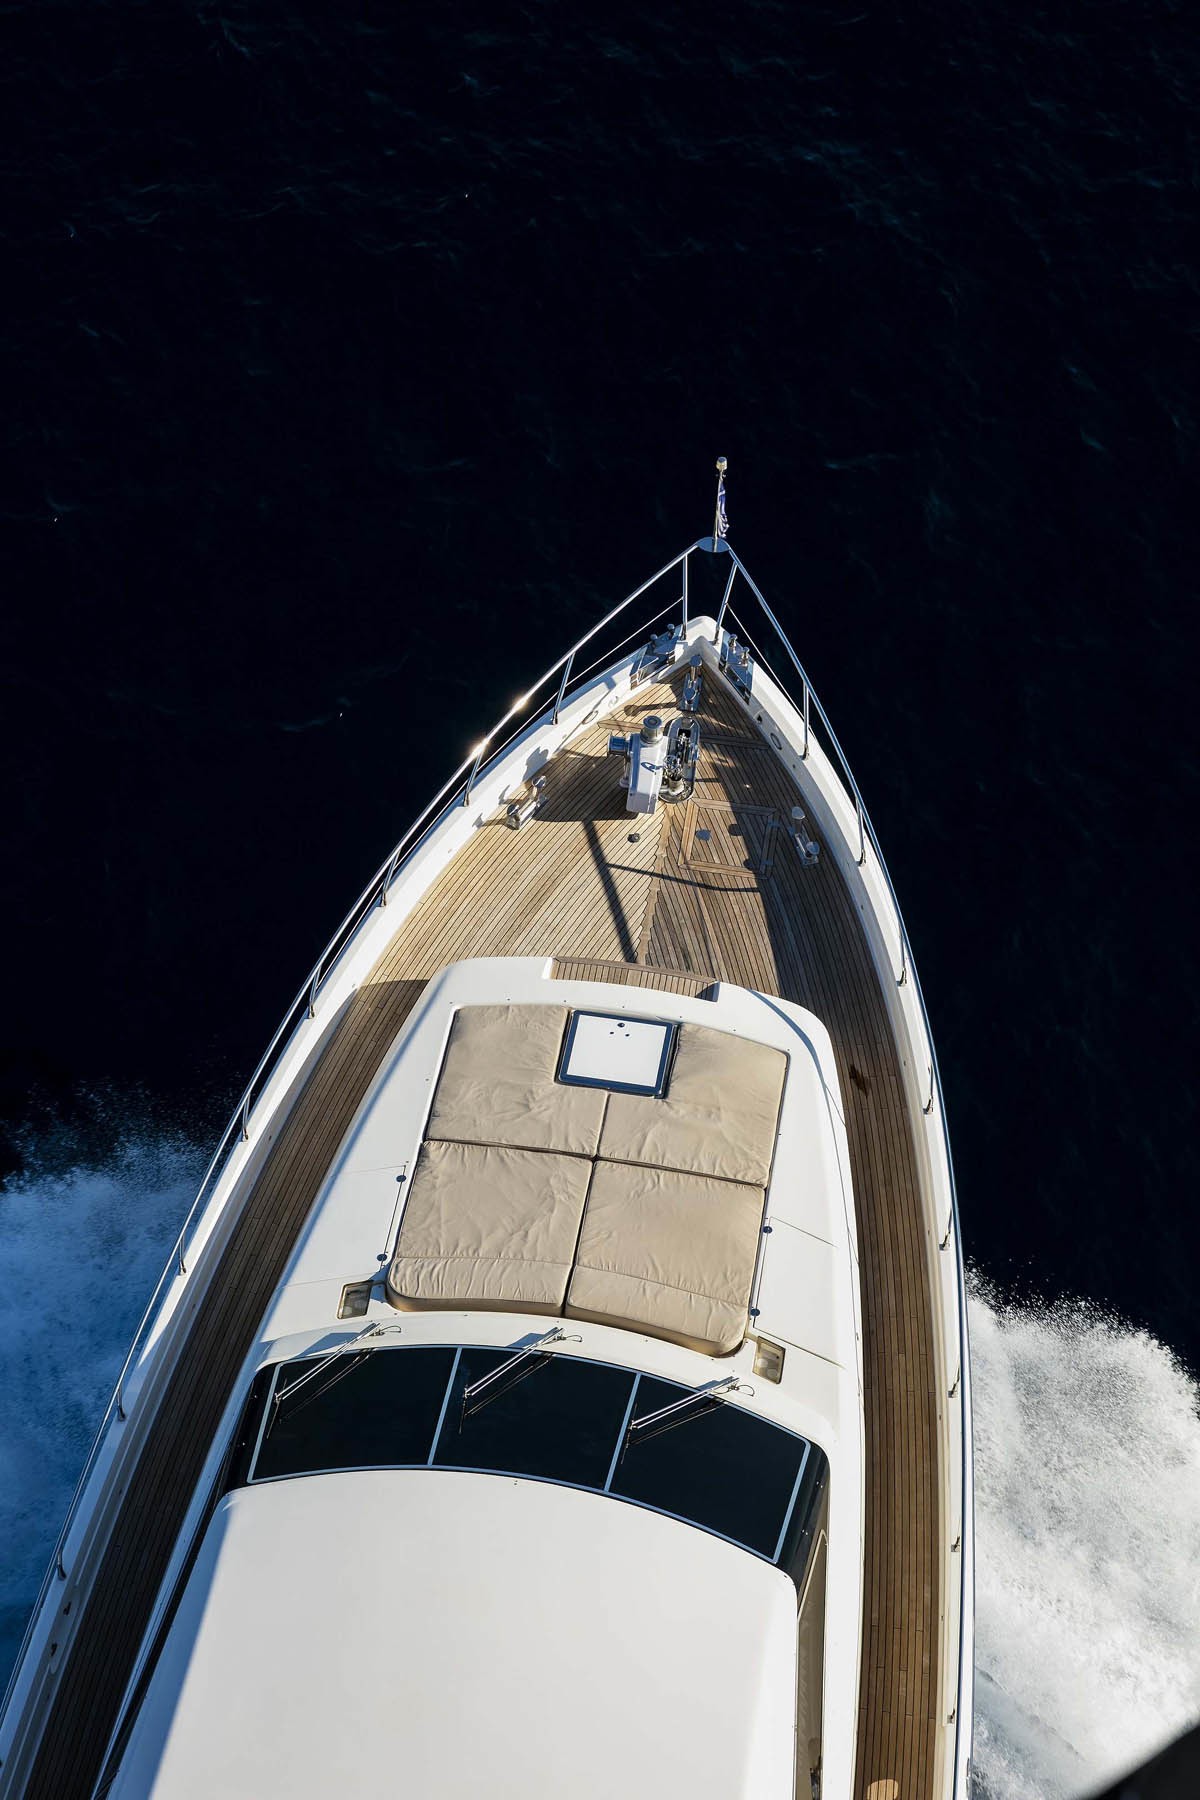 The 25m Yacht MYTHOS